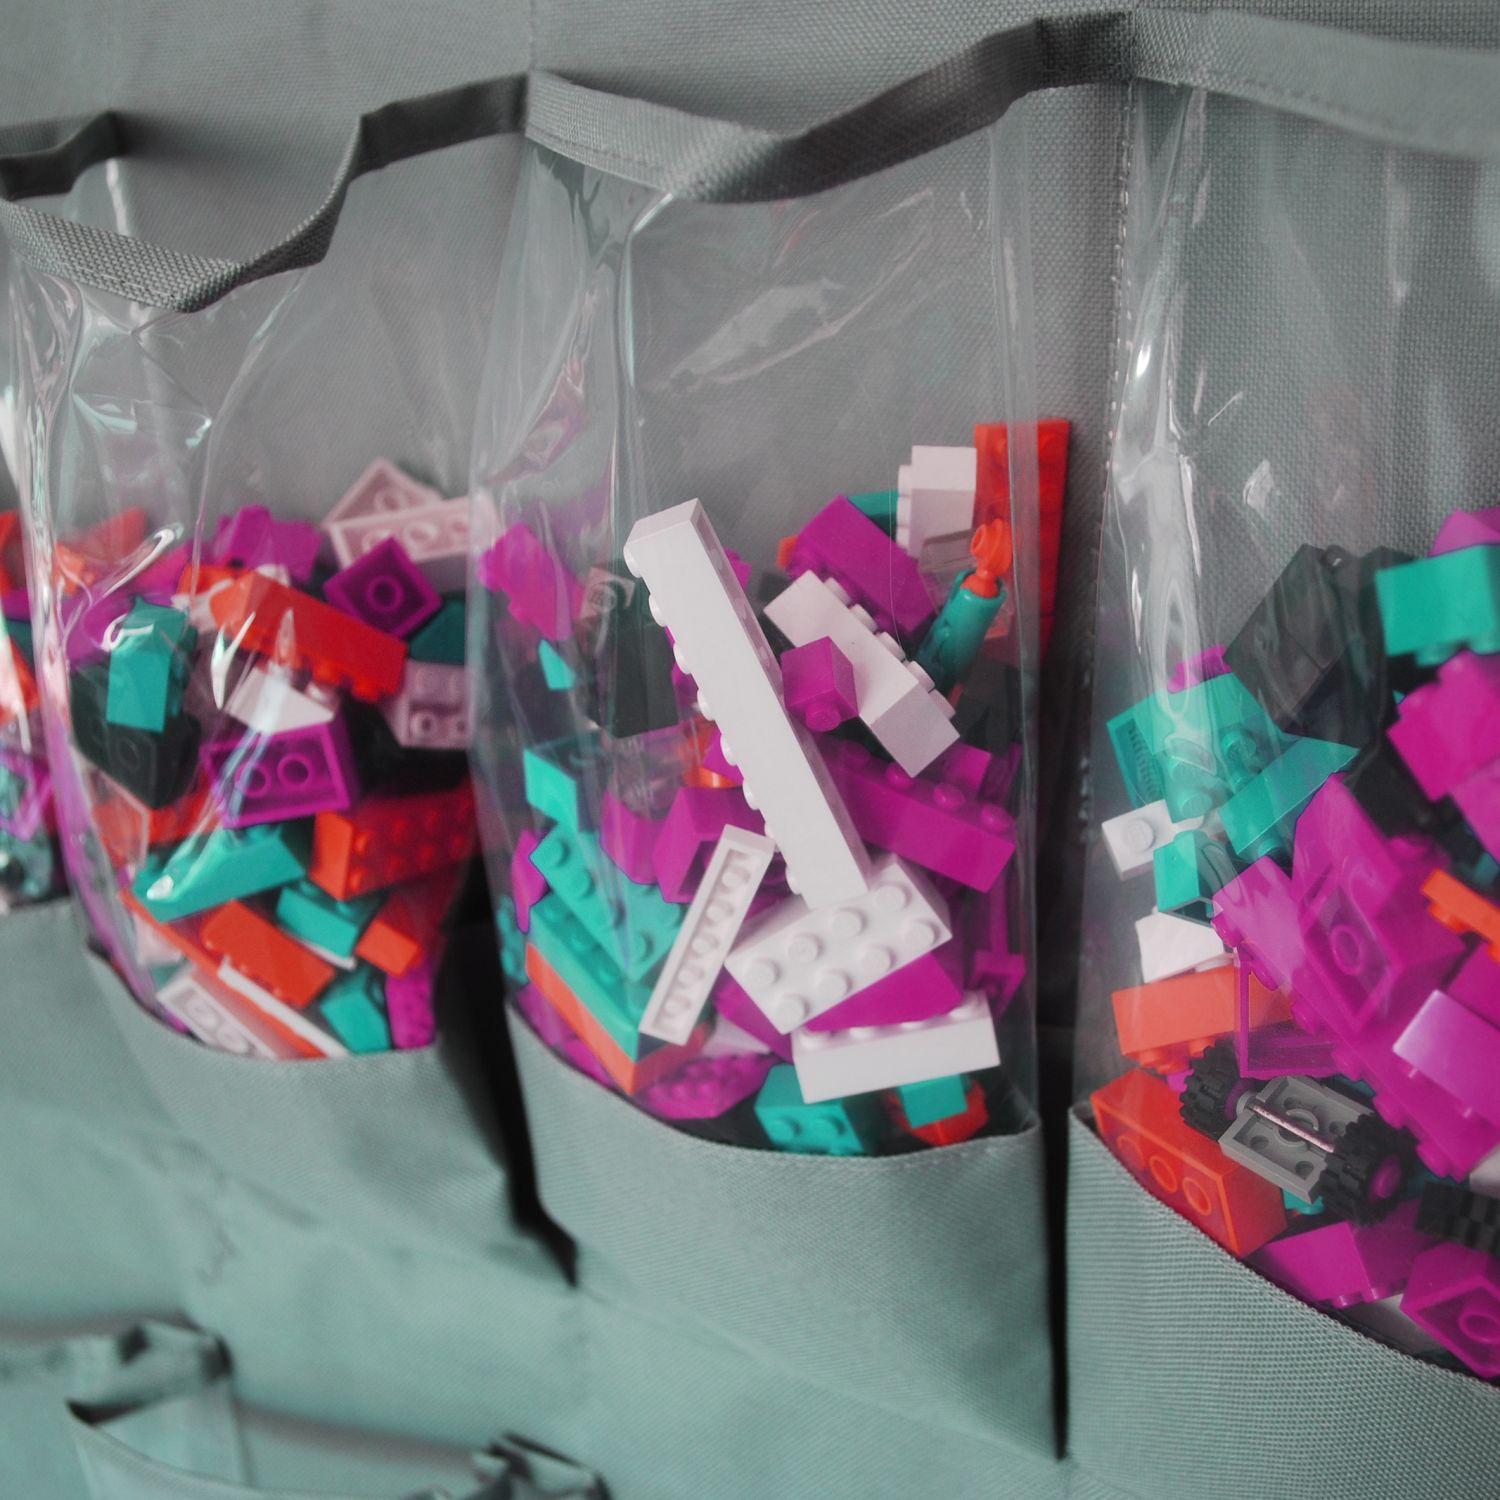 Legos stored in a shoe organizer